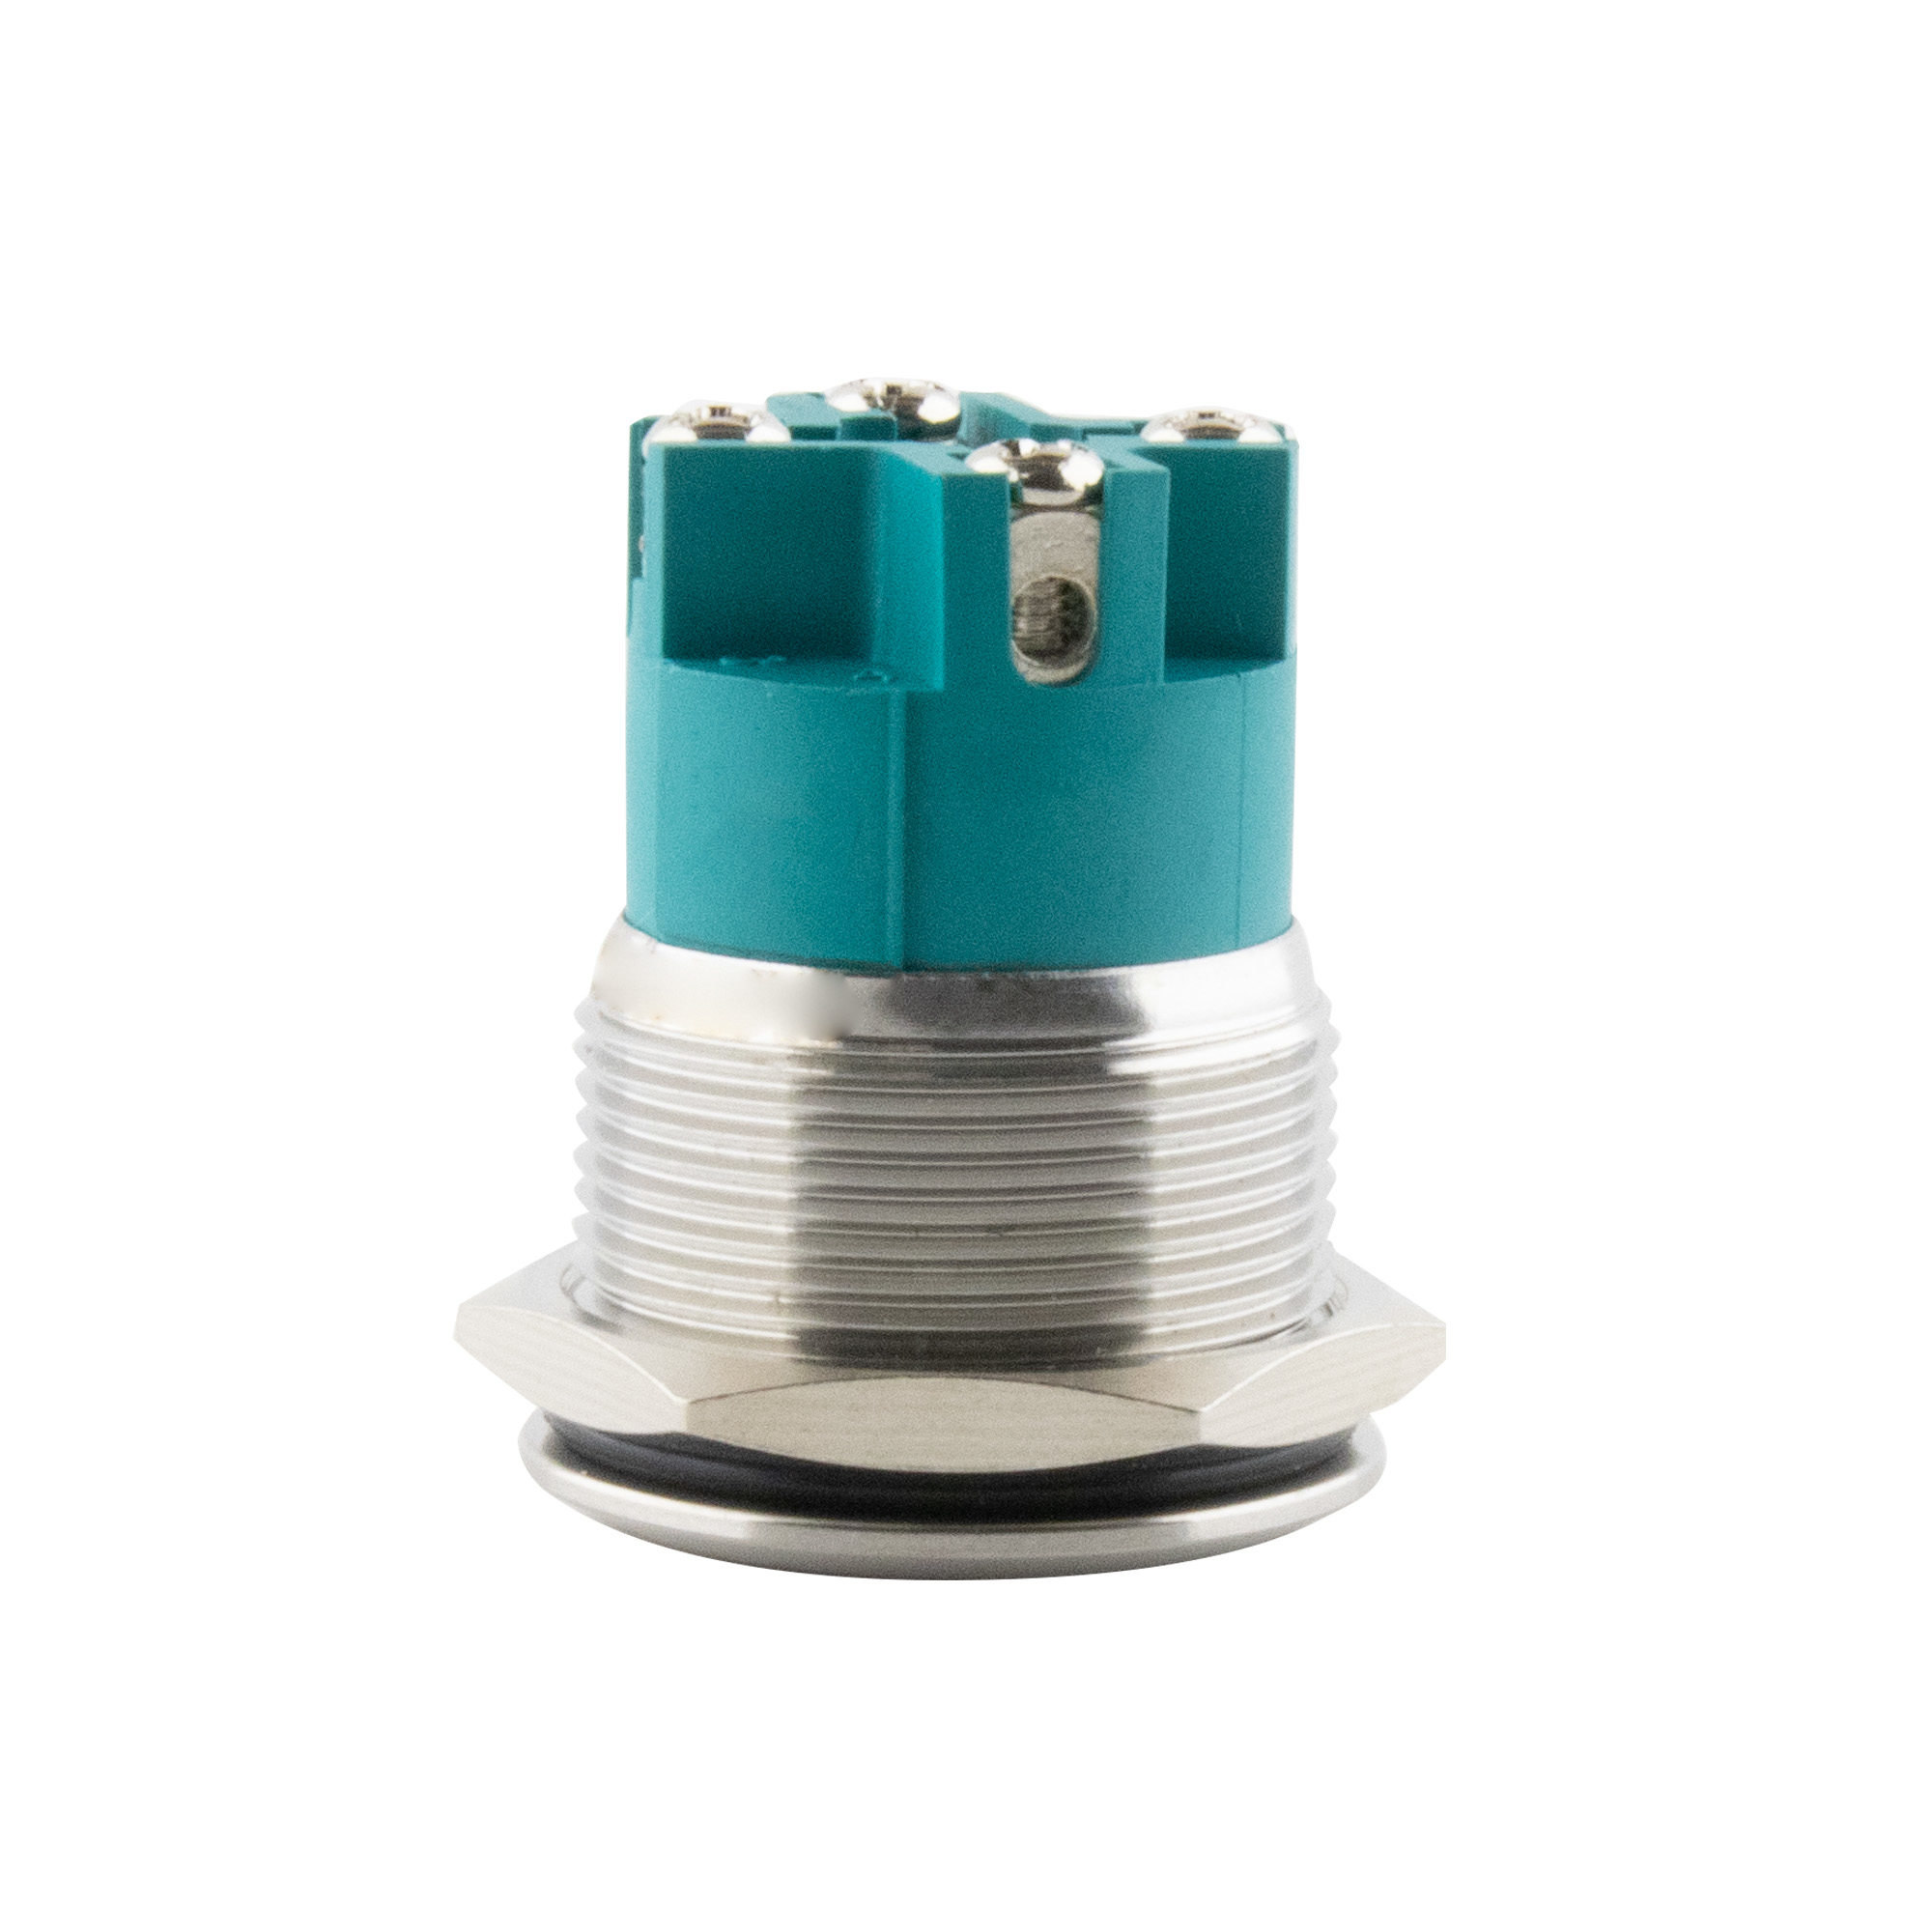 Drucktaster Ø22mm flach LED Ring grün -screw